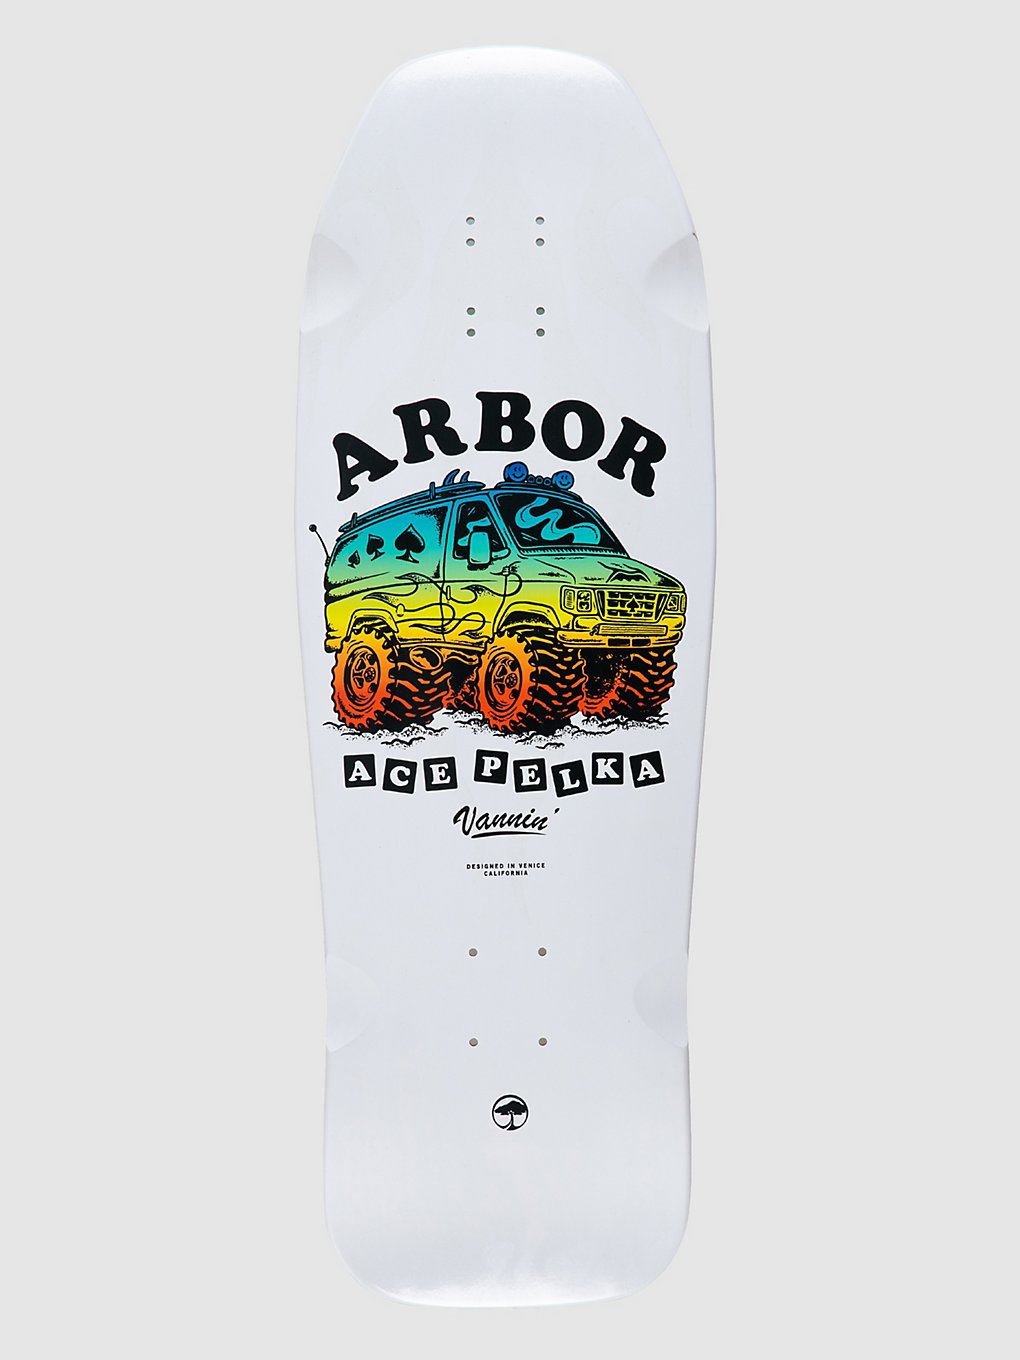 Arbor Ace Pelka Vannin 10" Skateboard deck wit